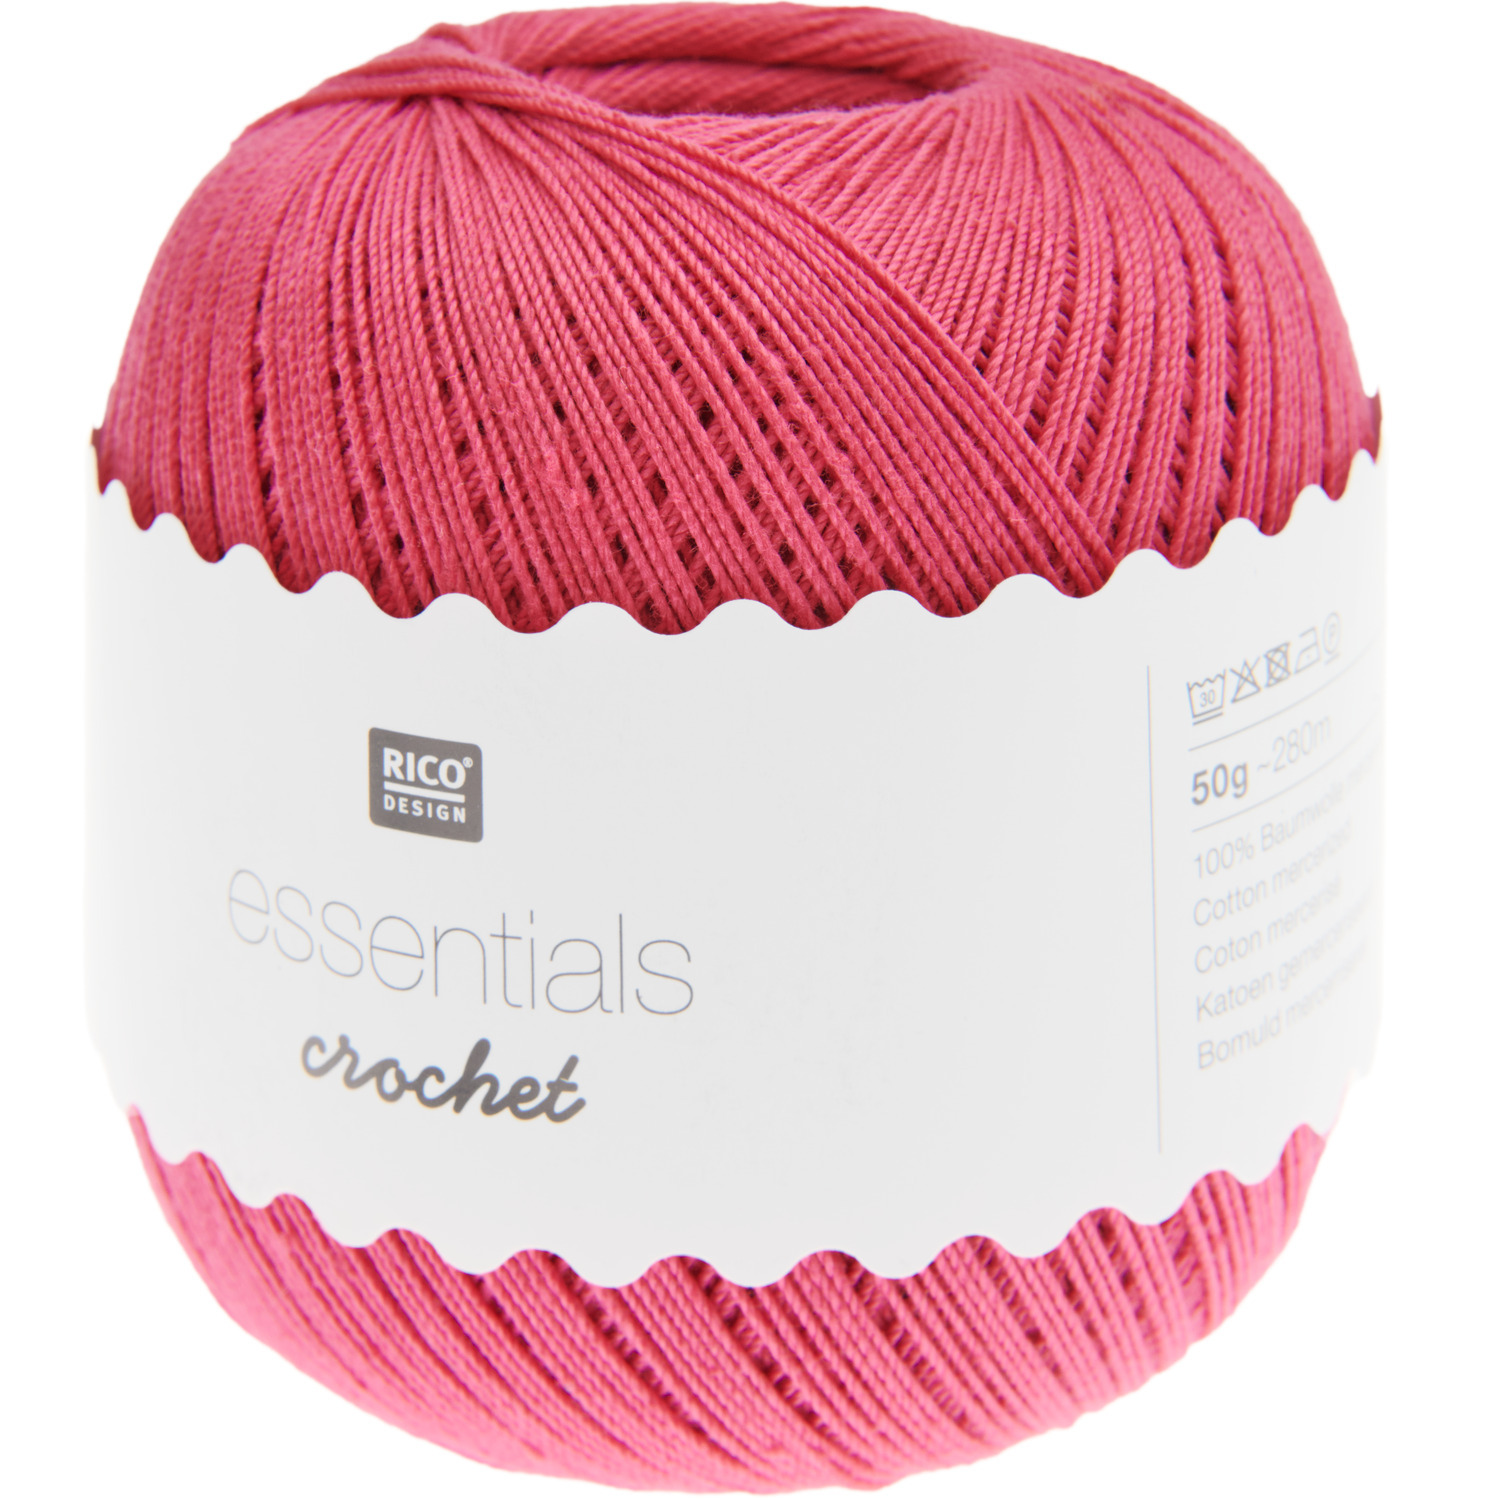 Essentials Crochet